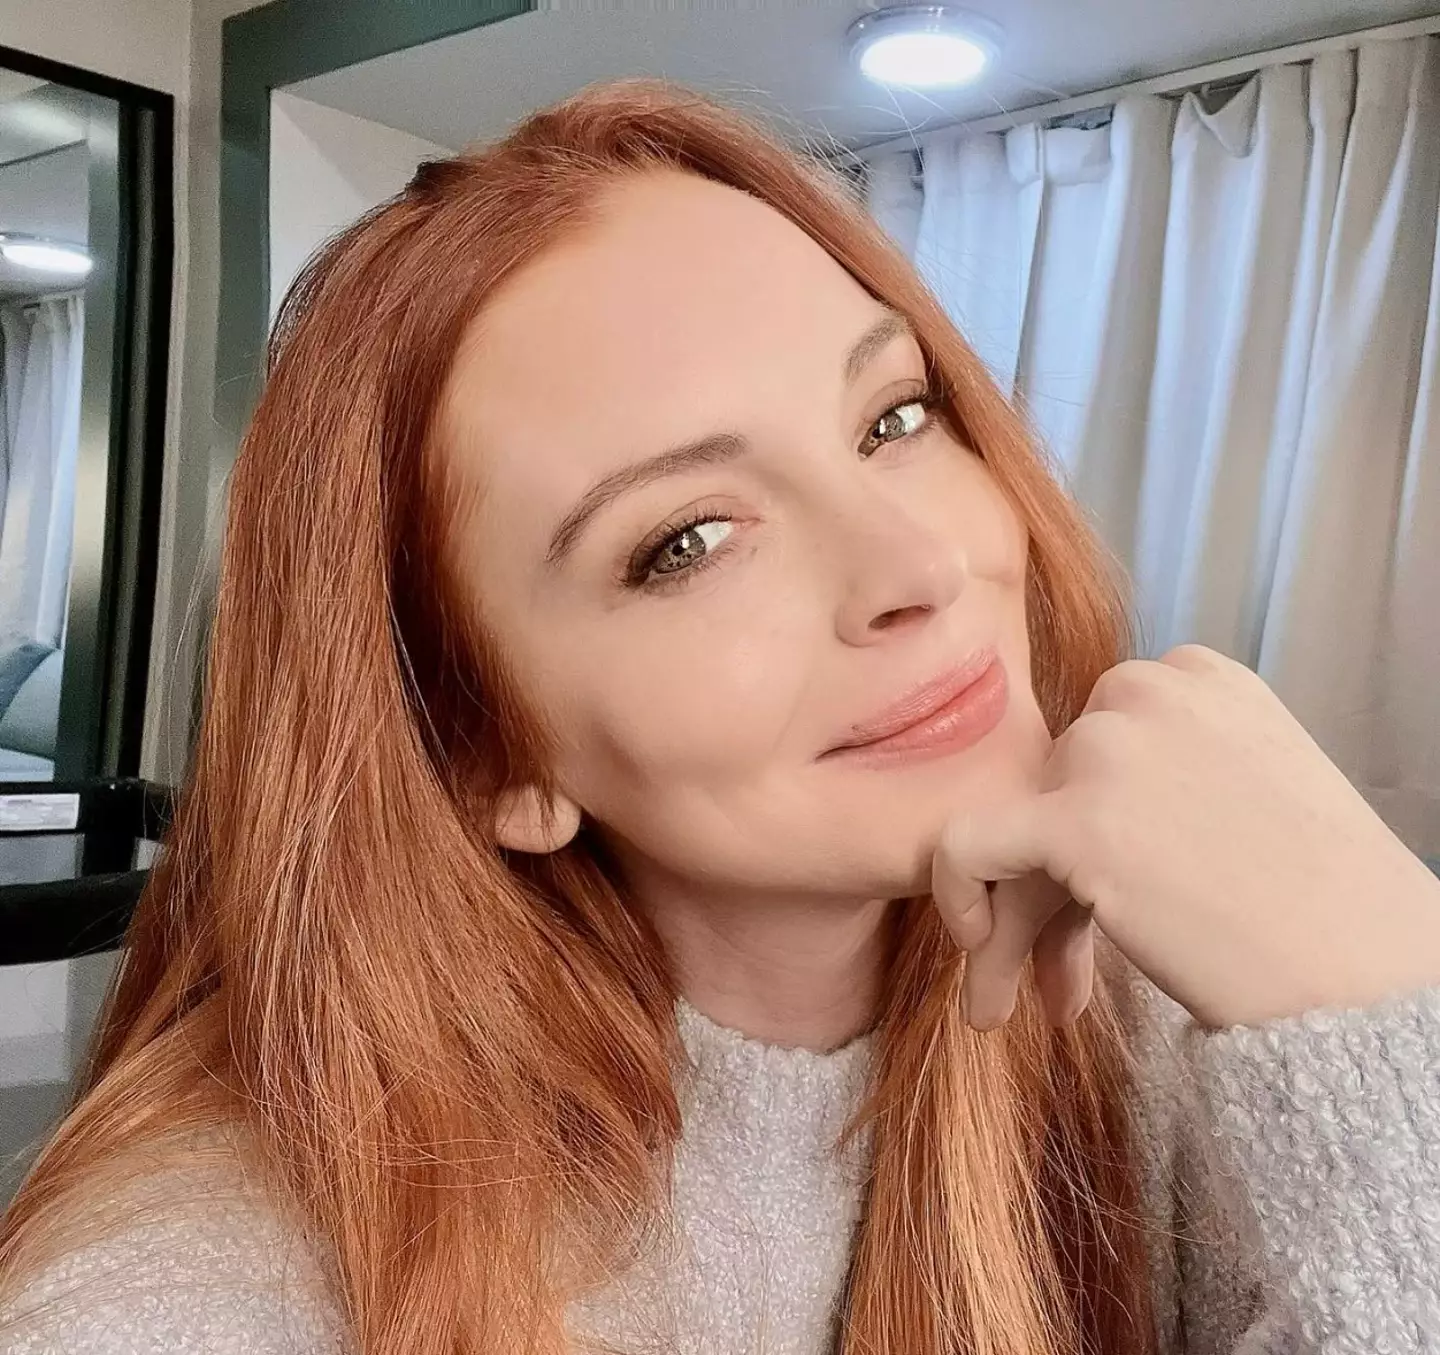 Lindsay Lohan has revealed why she left Hollywood for Dubai.